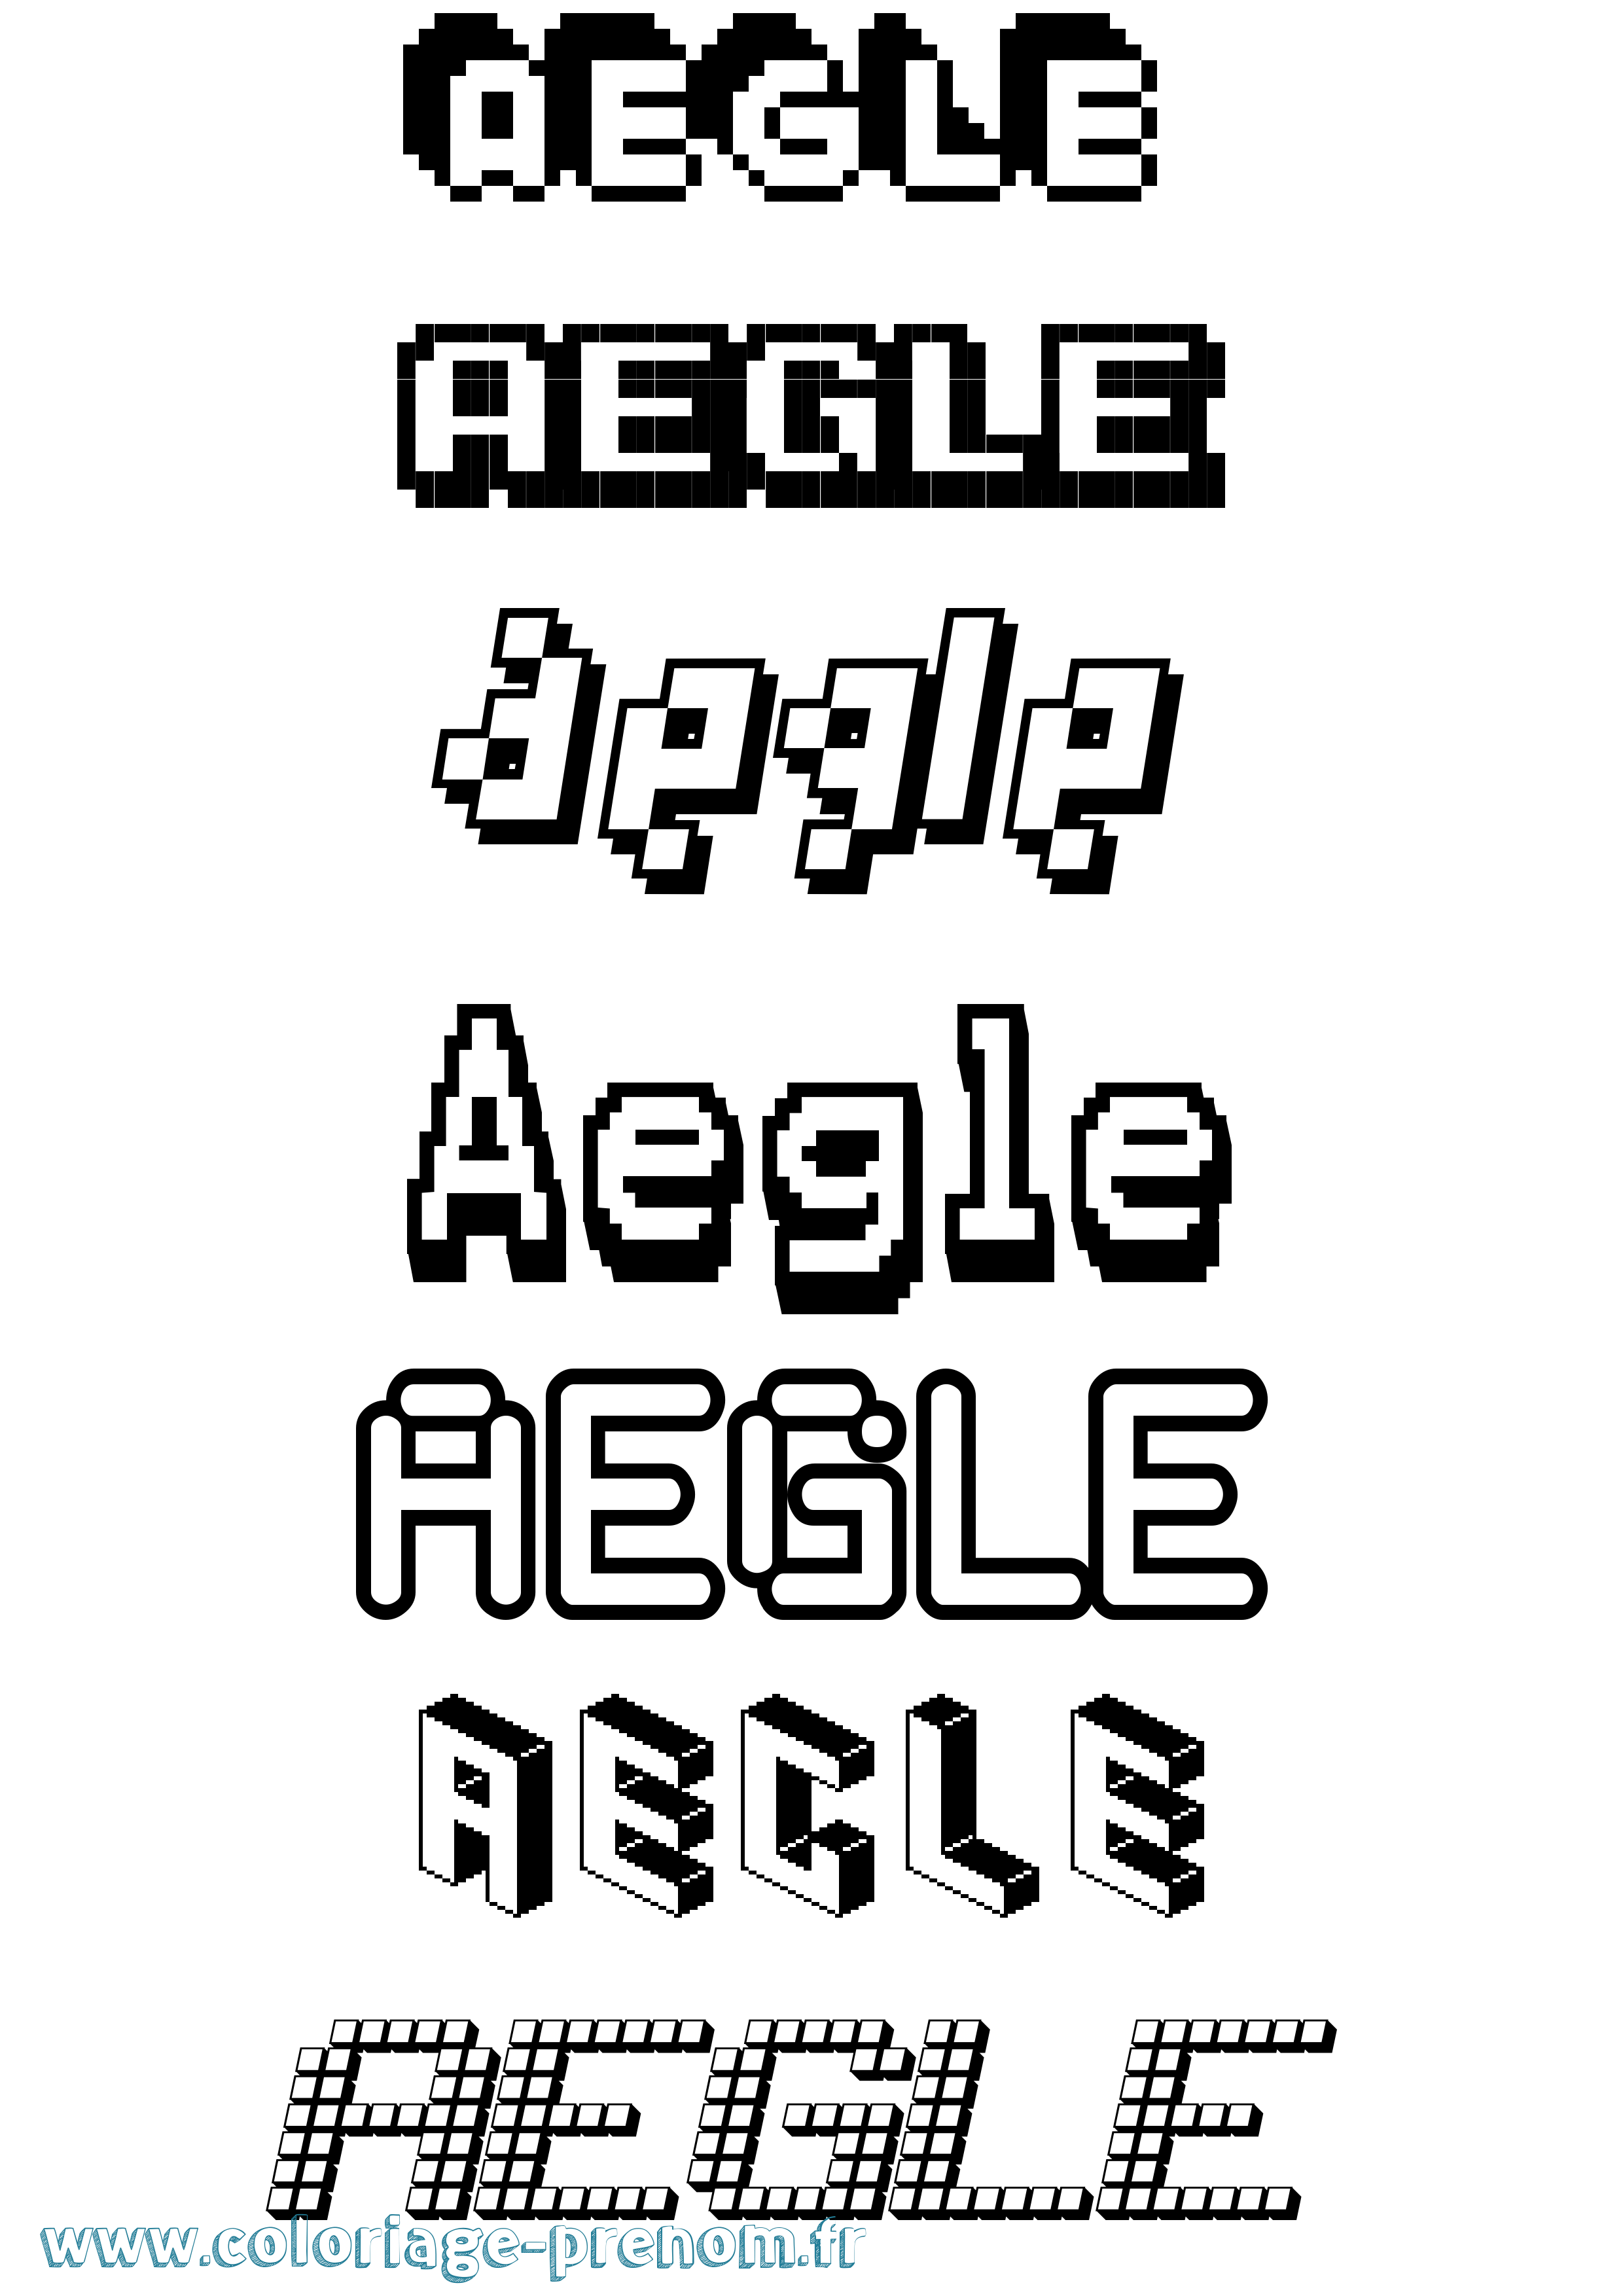 Coloriage prénom Aegle Pixel